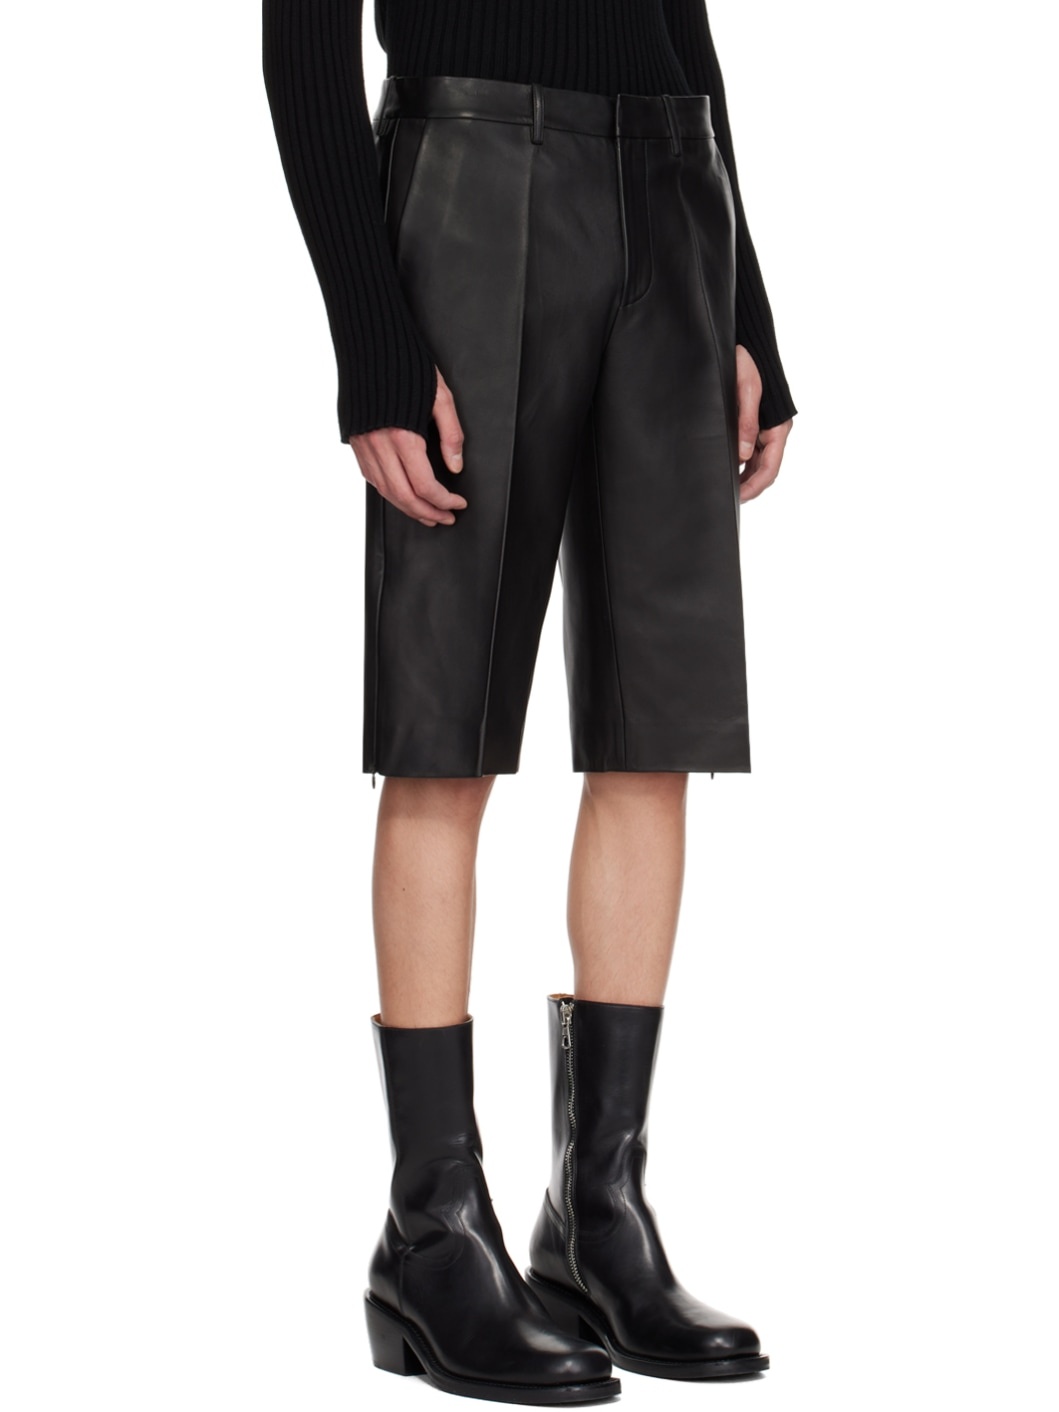 Black Creased Leather Shorts - 2